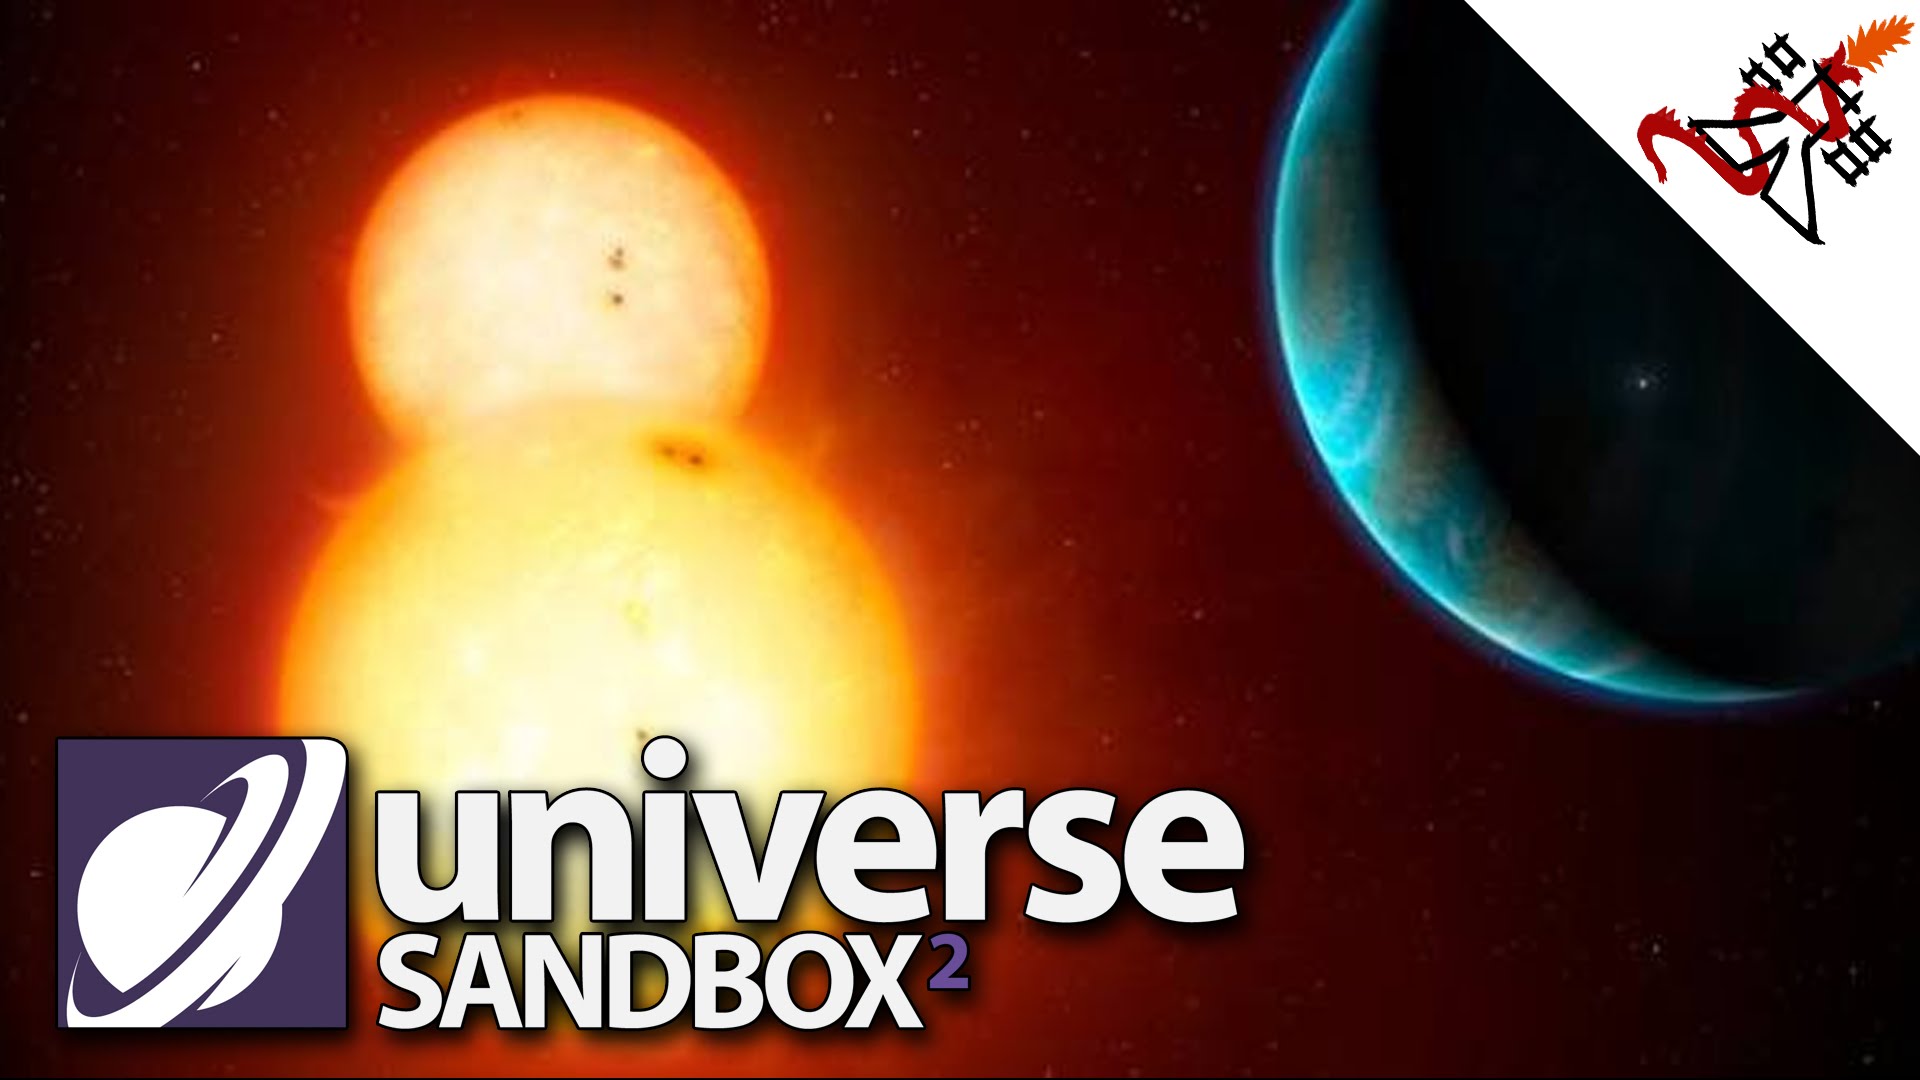 The universe sandbox 2 steam фото 54